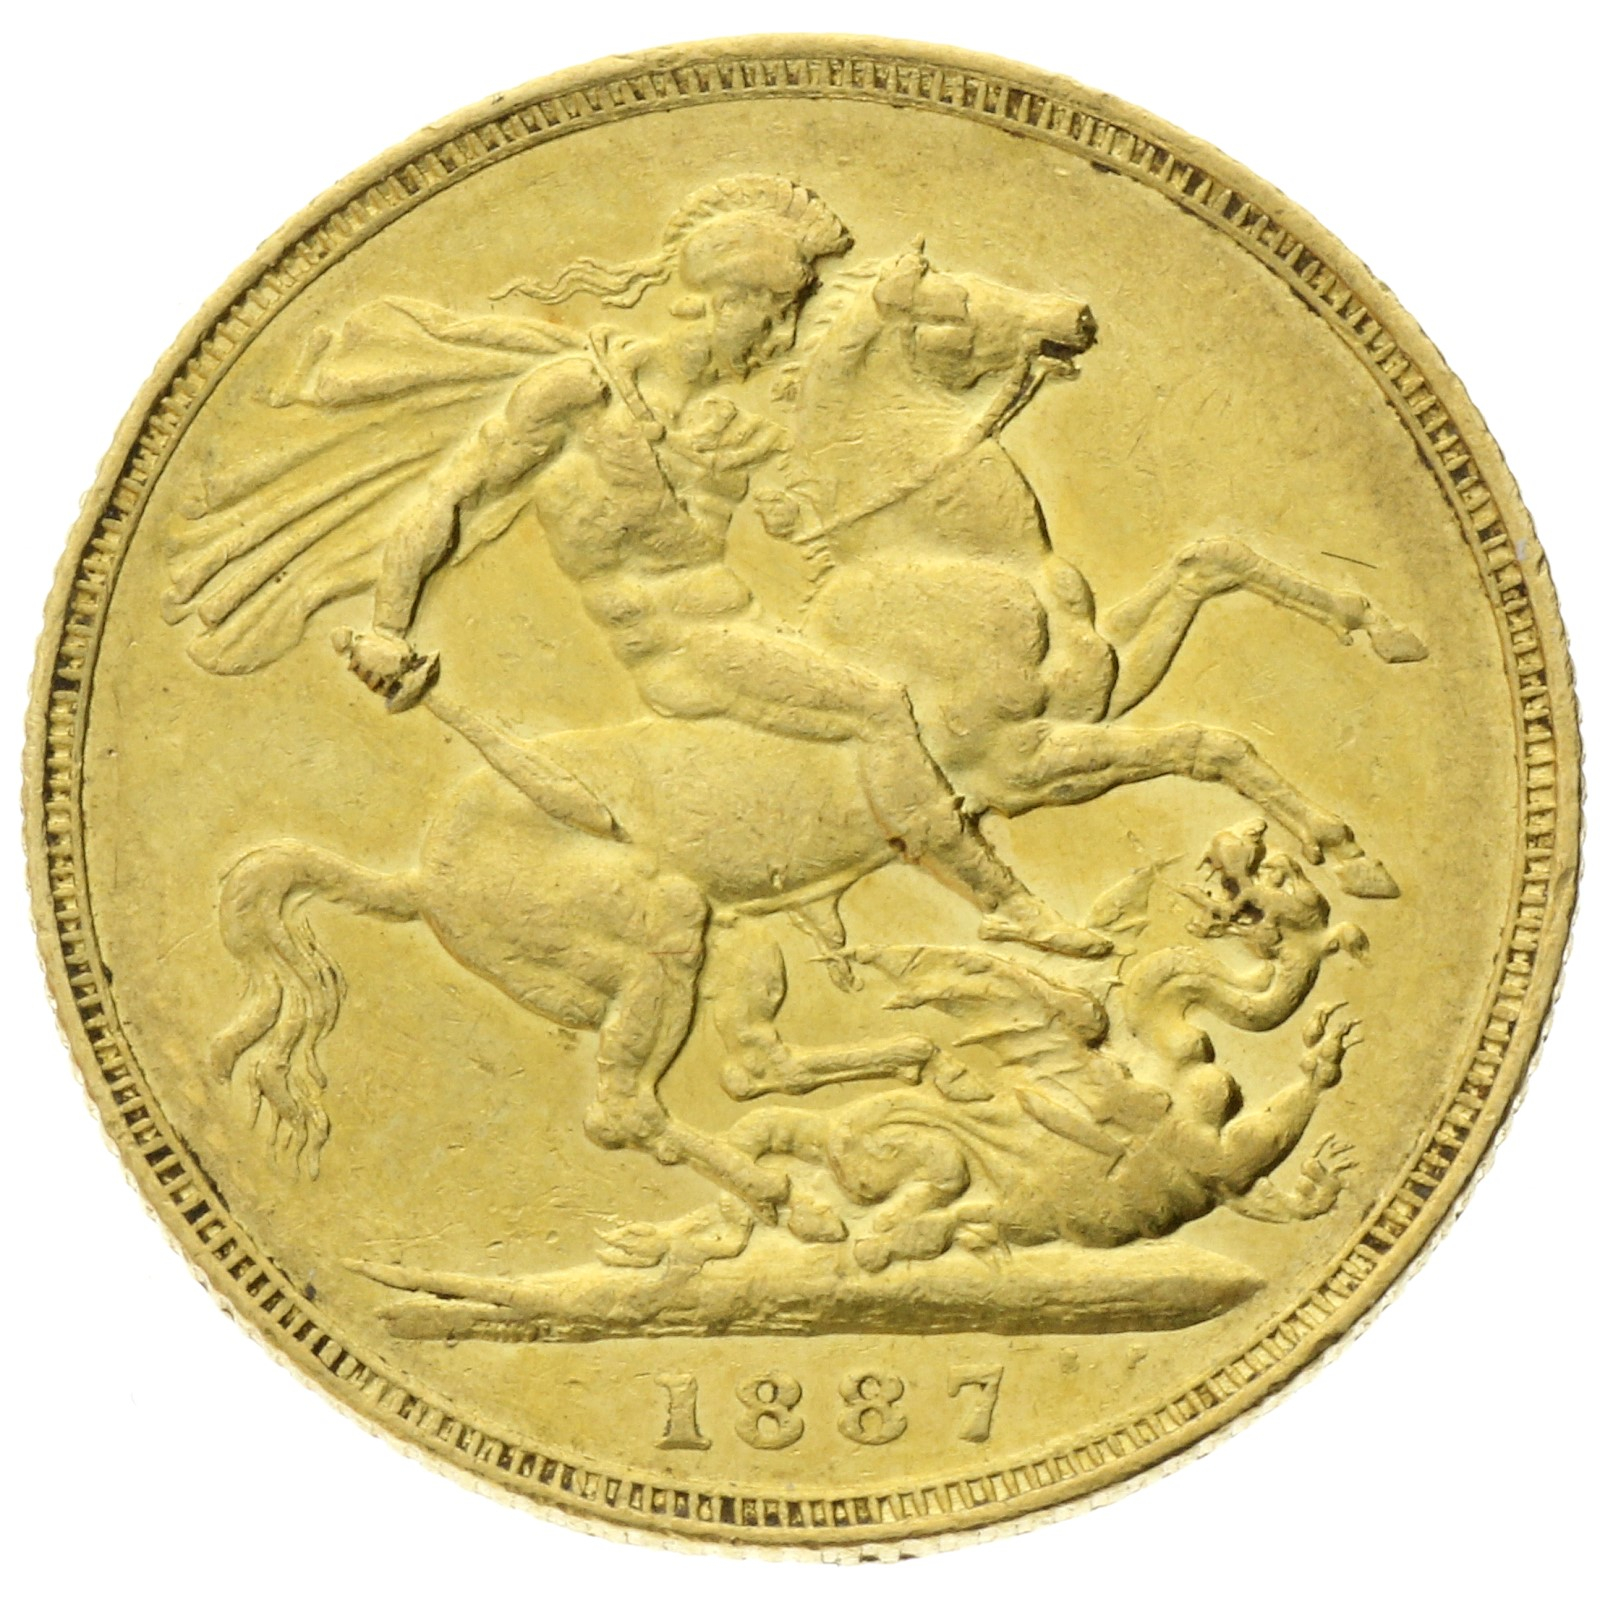 United Kingdom - 1 sovereign - 1887 